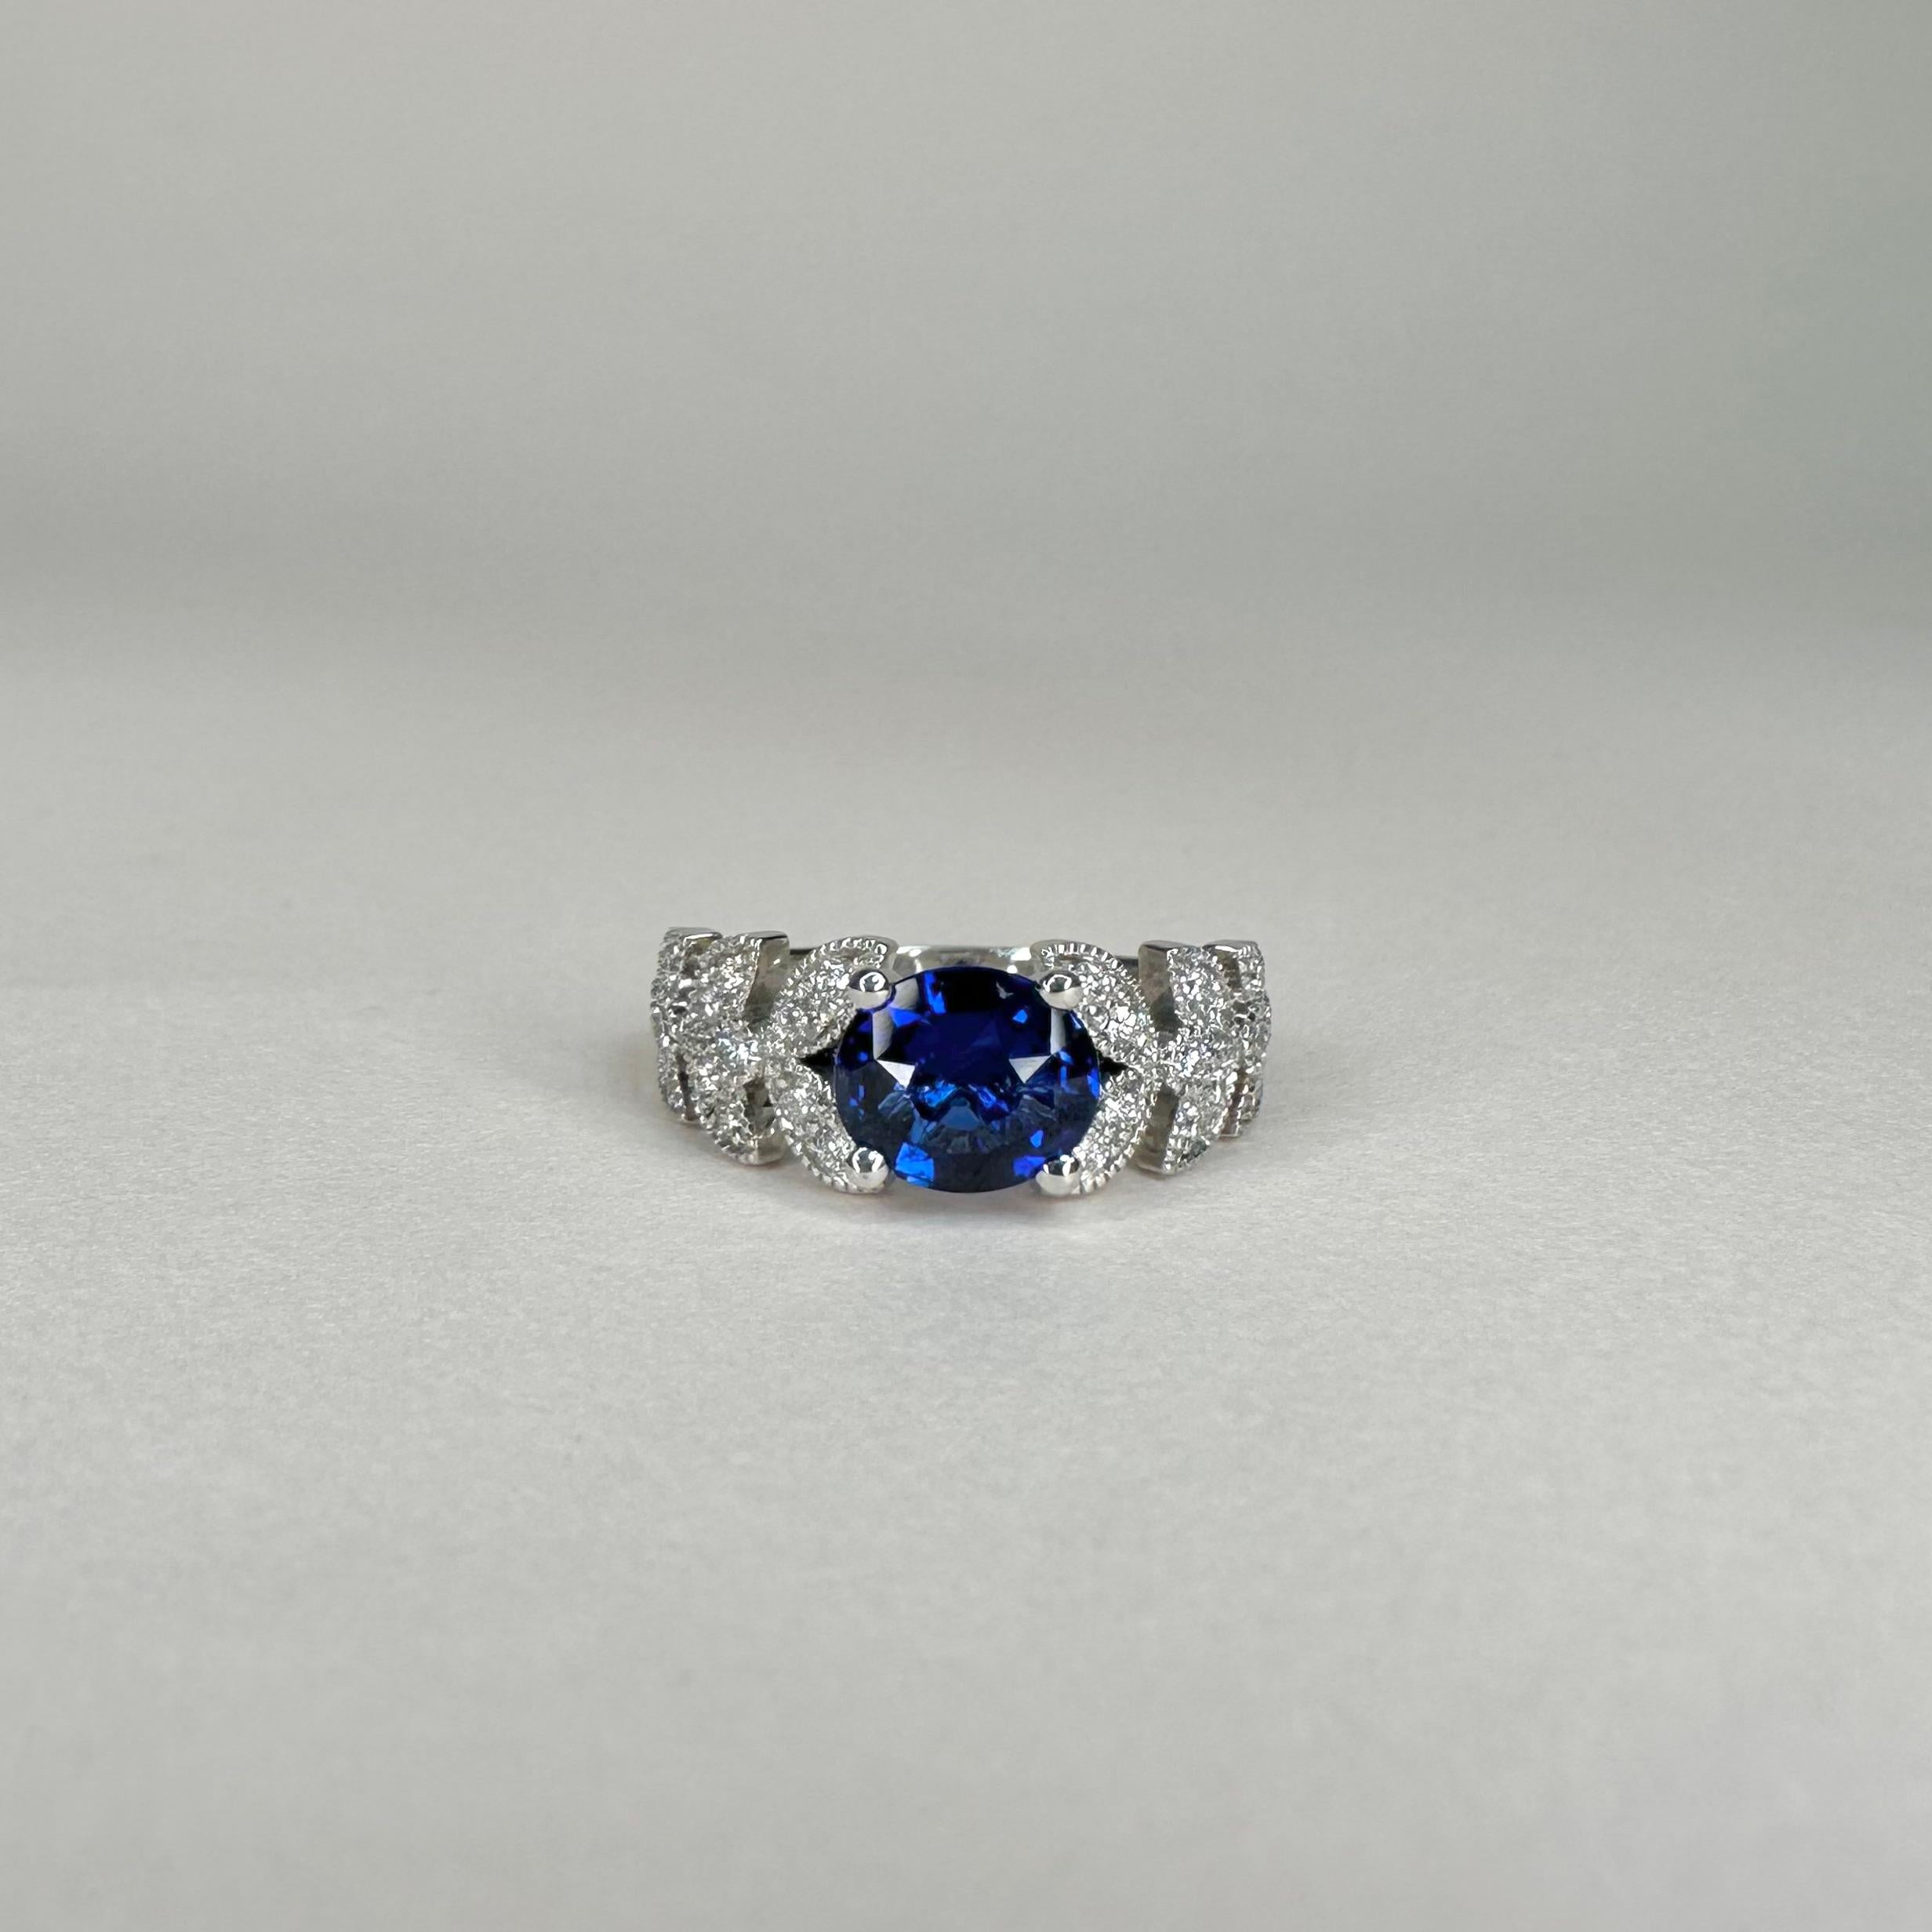 For Sale:  18k White Gold Laurel Leaf Design Ring Set with 1.53 Ct Royal Blue Oval Sapphire 2